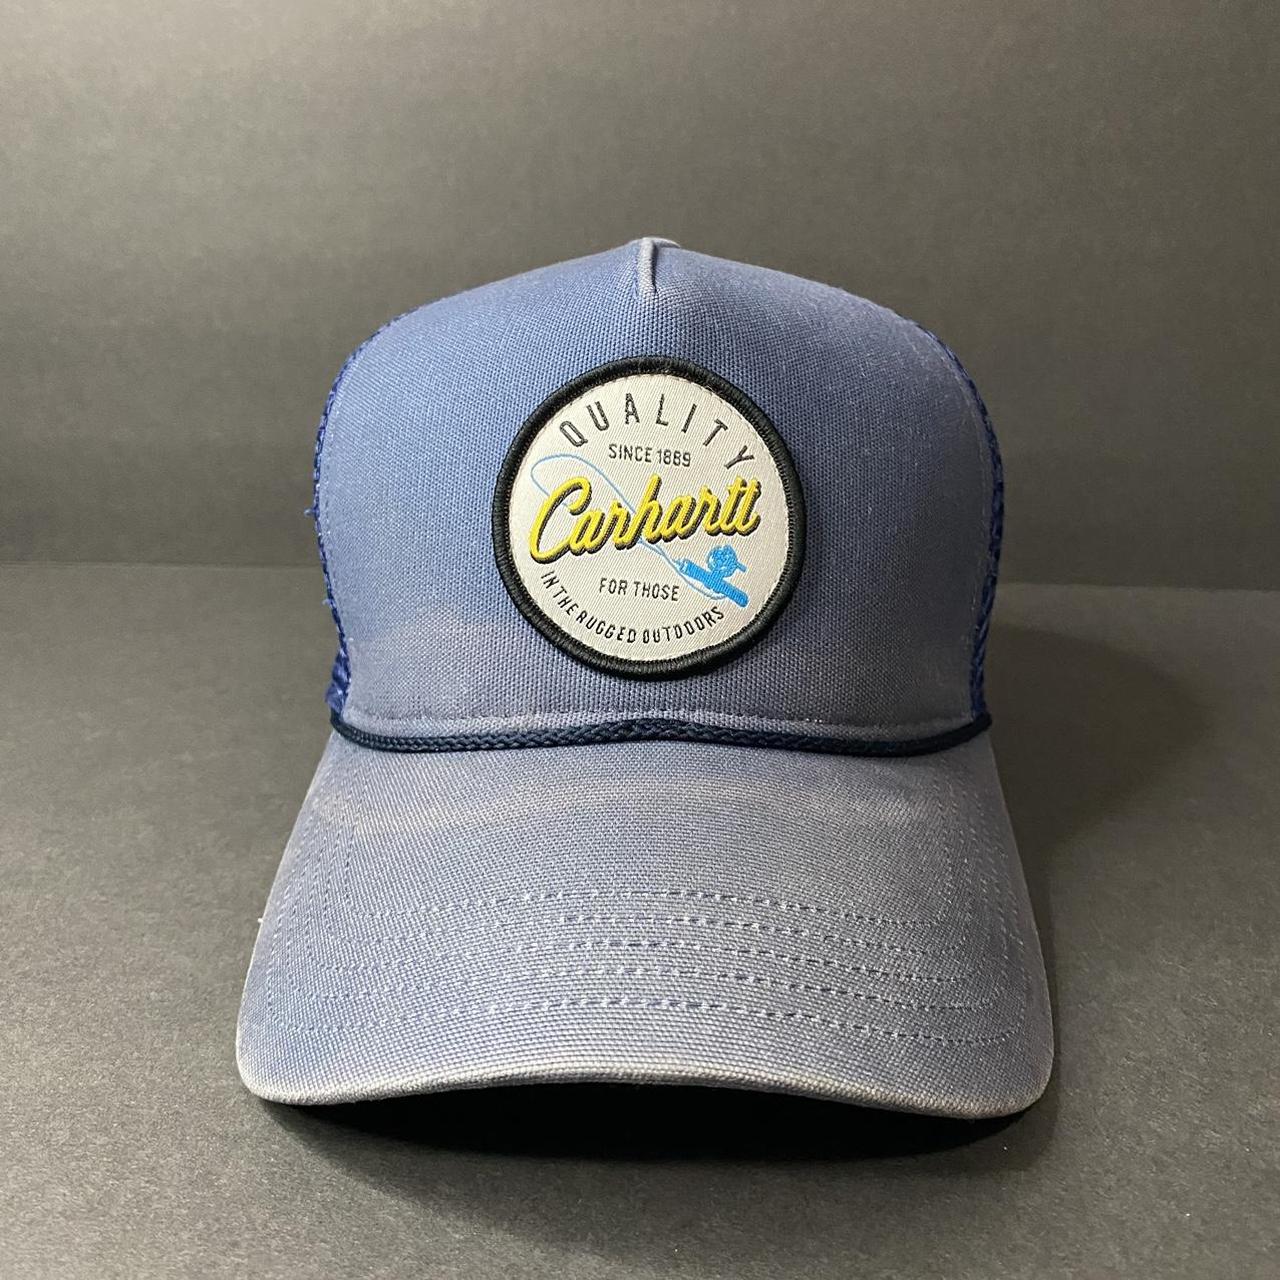 Carhartt Quality Since 1889 Blue Fishing Theme Cap